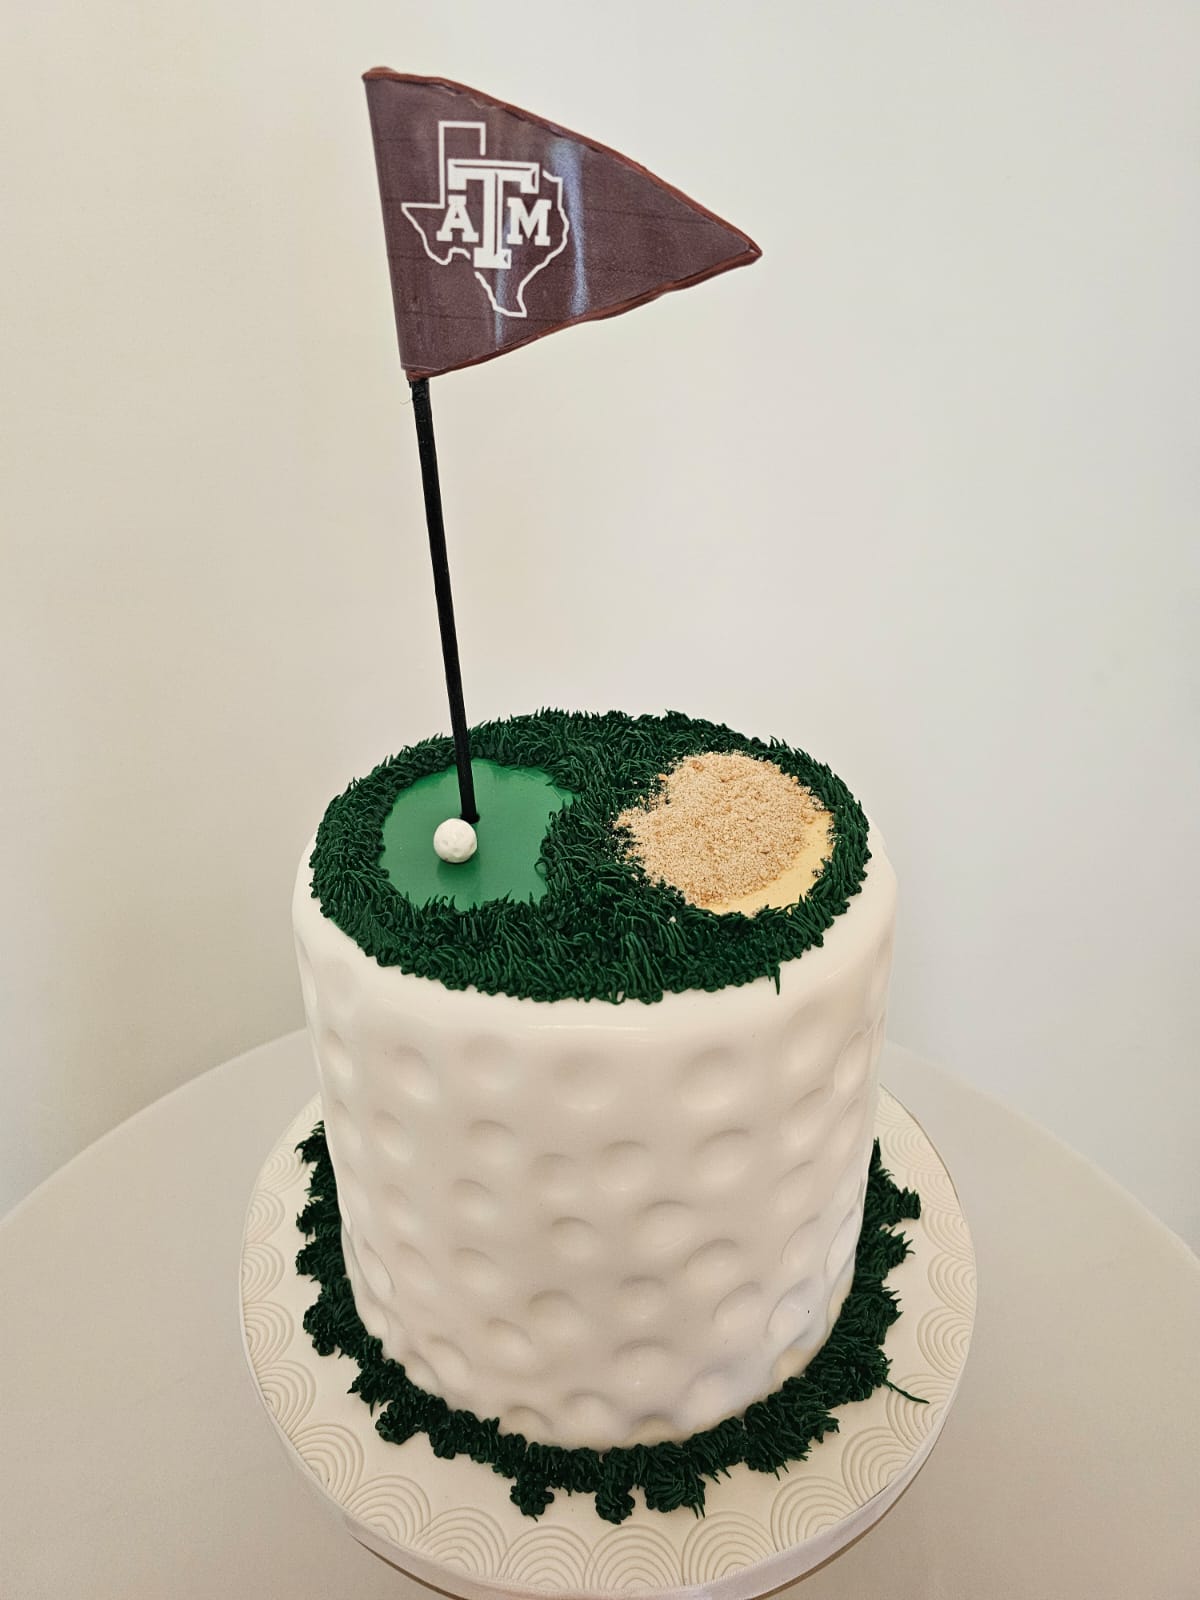 Grooms Cake. ATM Golf Themed